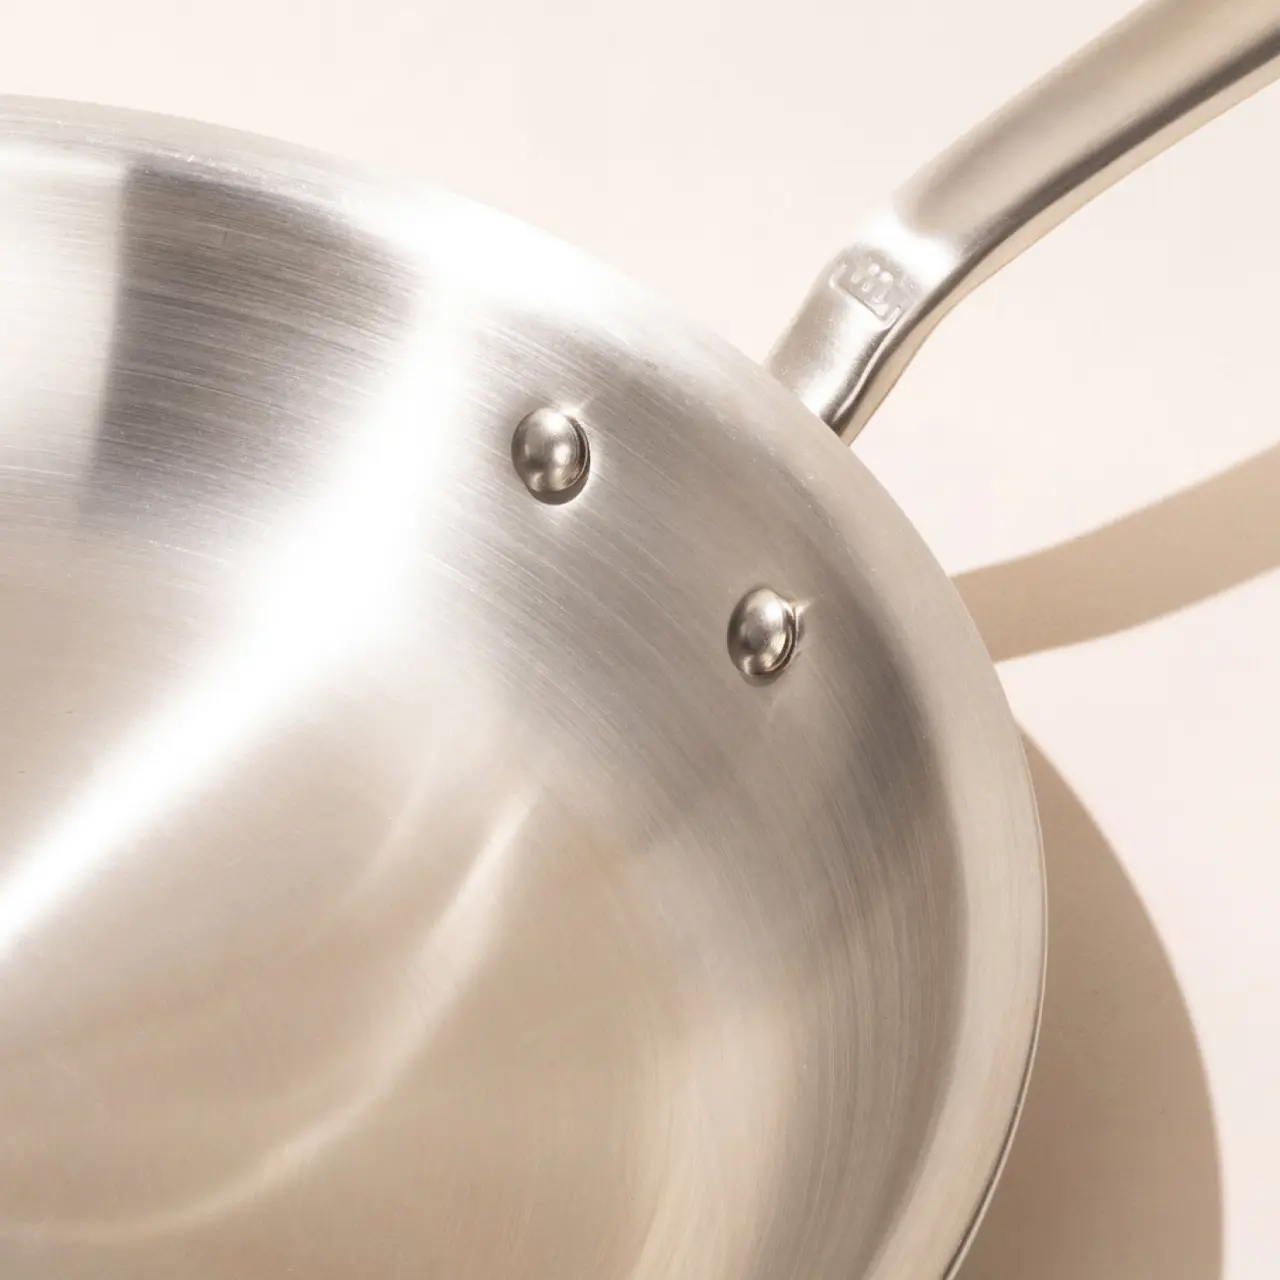 12 Stainless Steel Frying Pan